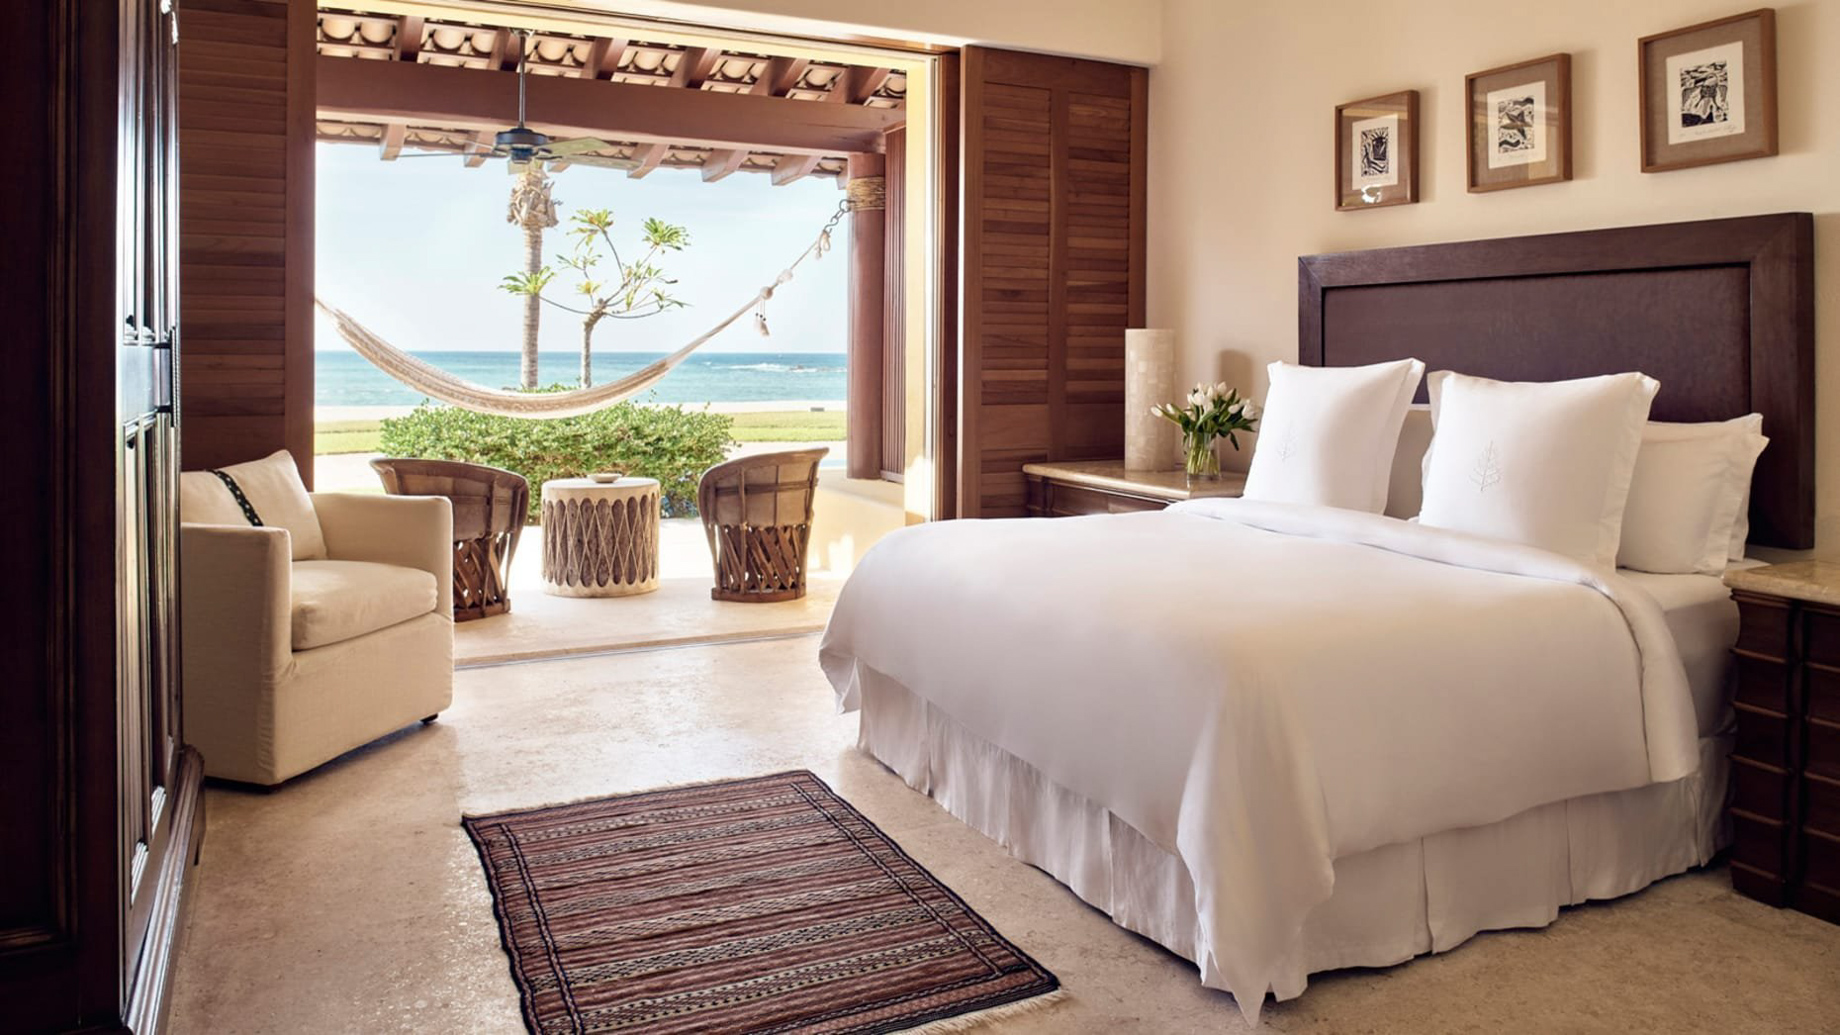 Four Seasons Resort Punta Mita – Nayarit, Mexico – Marea Beach House Bedroom View